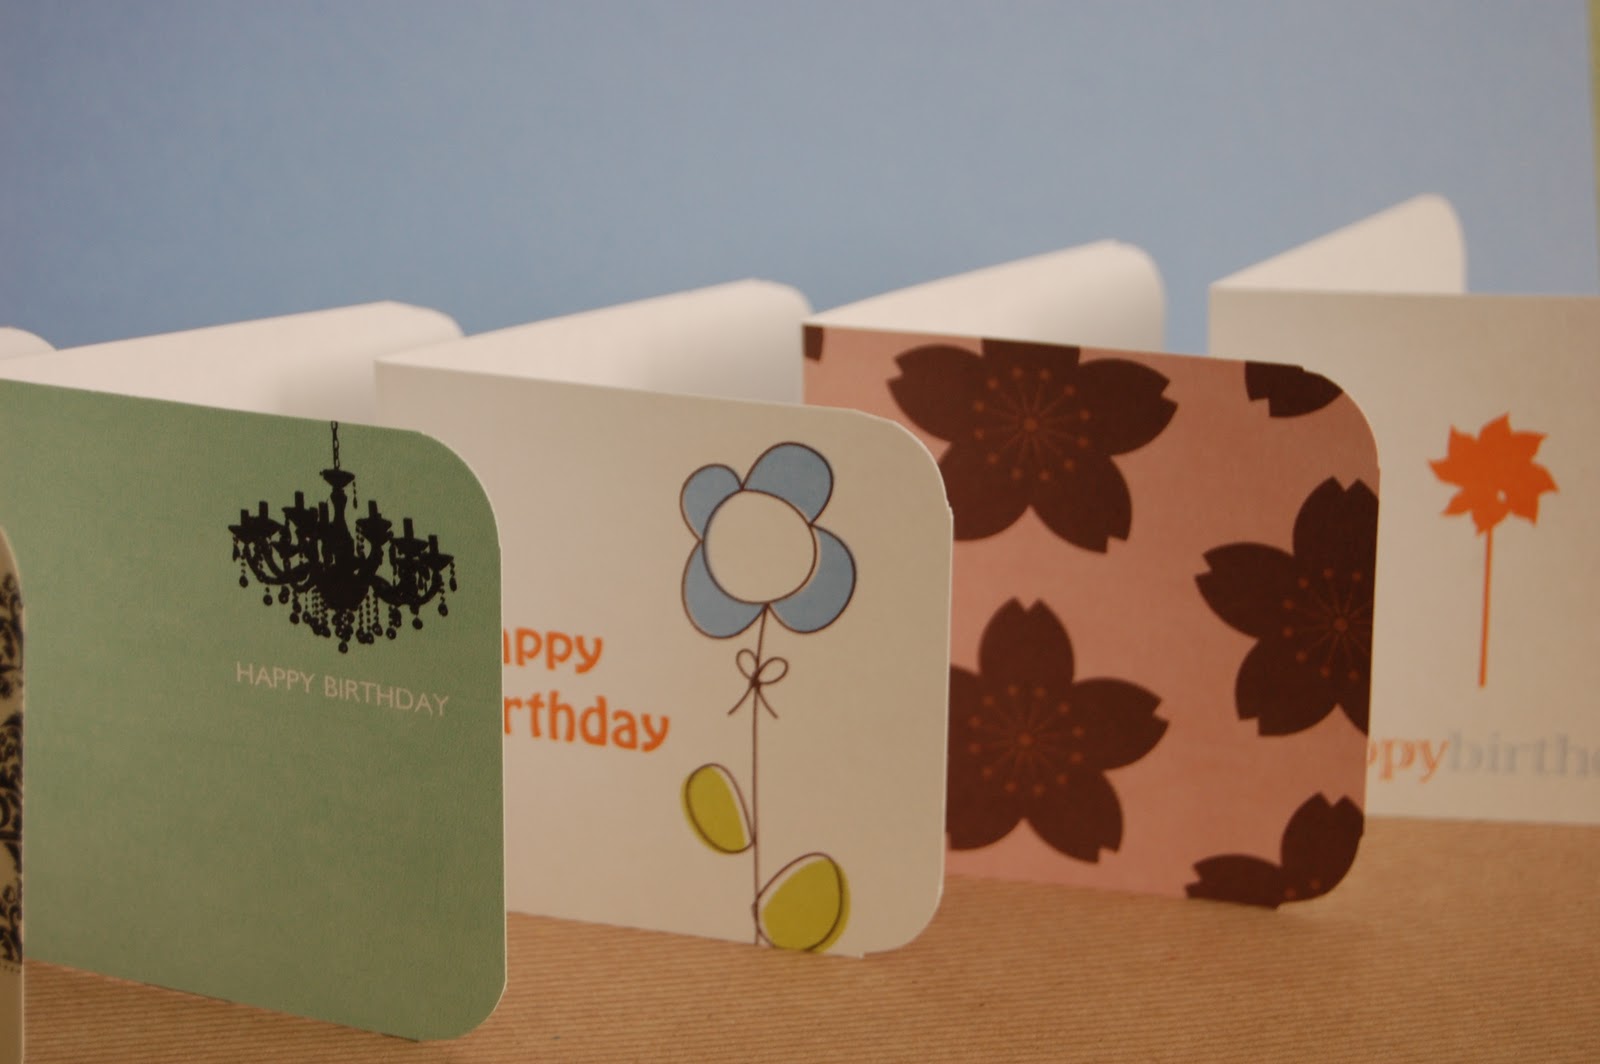 flipawoo-invitation-and-party-designs-3-mini-happy-birthday-cards